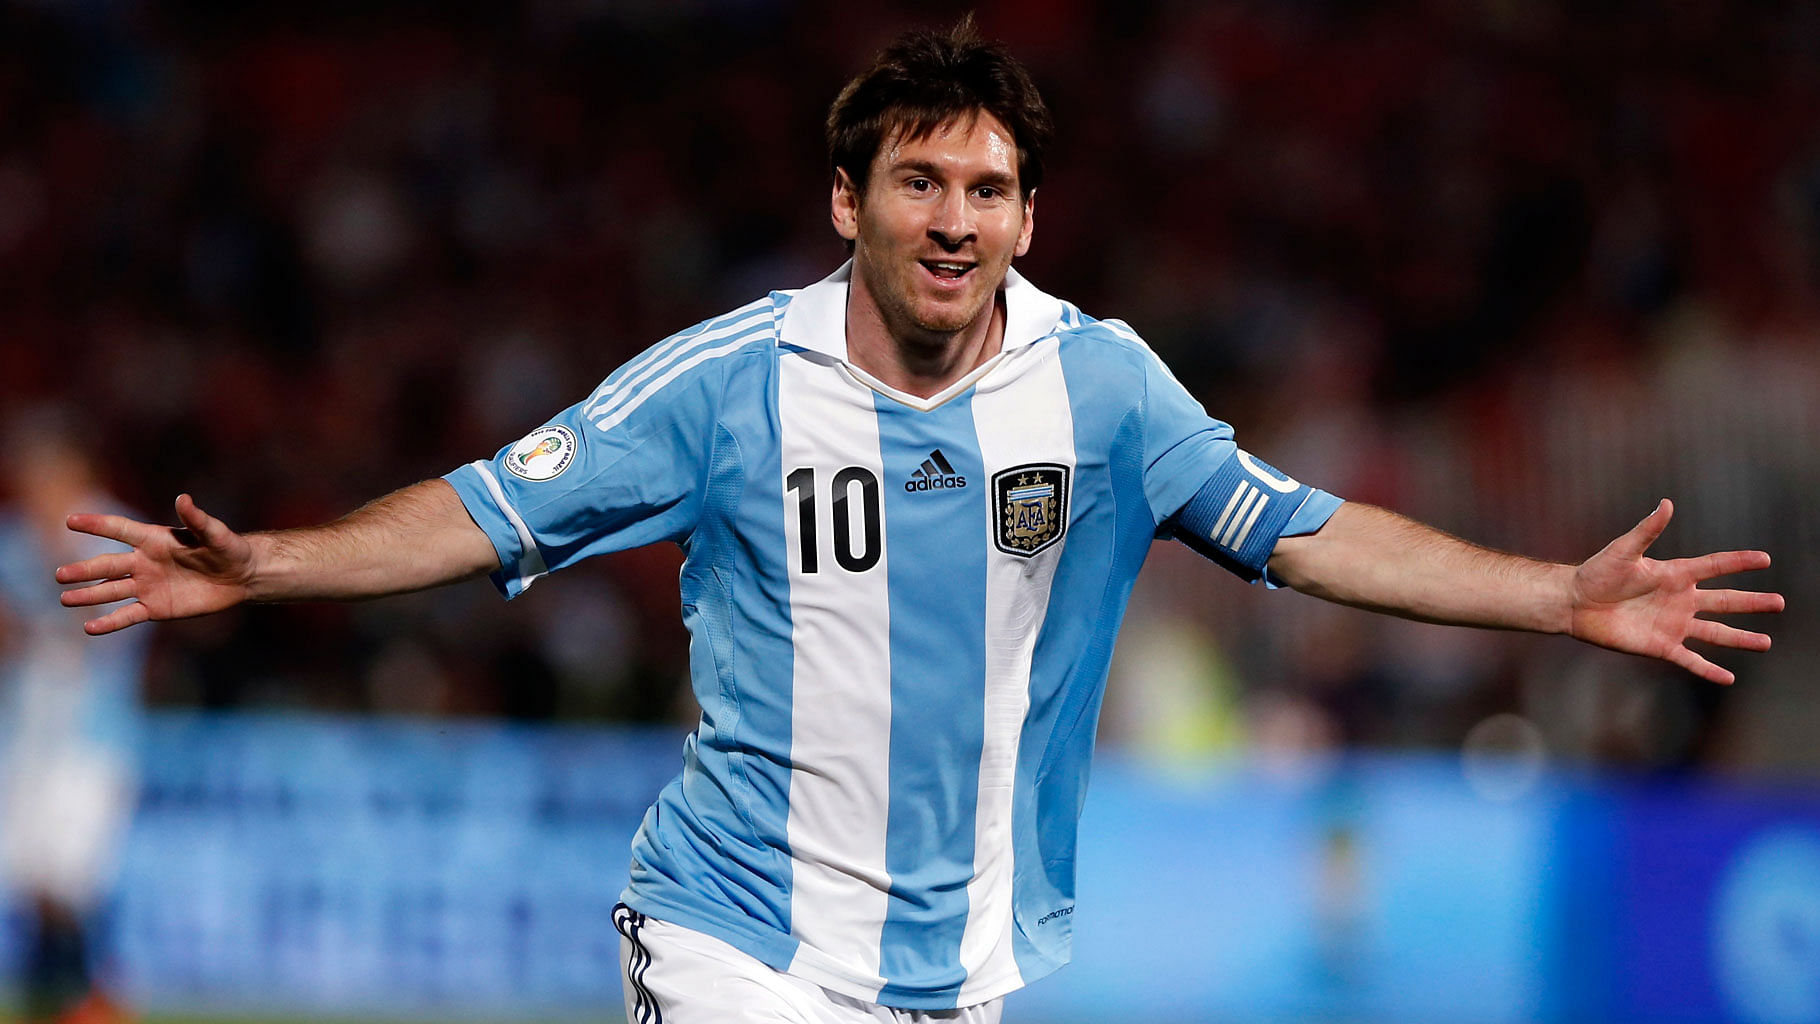 File photo of Lionel Messi. (Photo: Reuters)